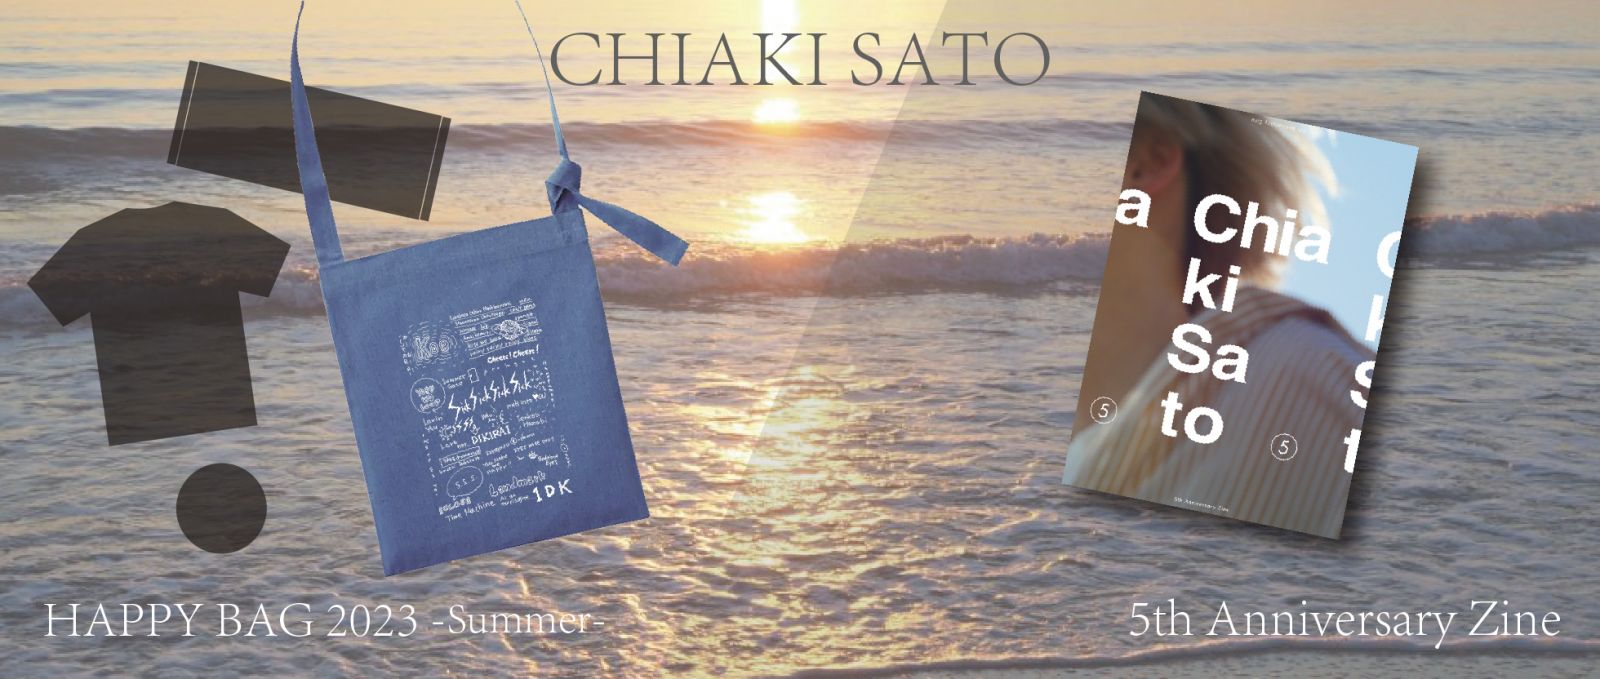 『CHIAKI SATO 5th Anniversary Zine』 & 『Happy Bag 2023 -Summer-』 受注販売スタート！